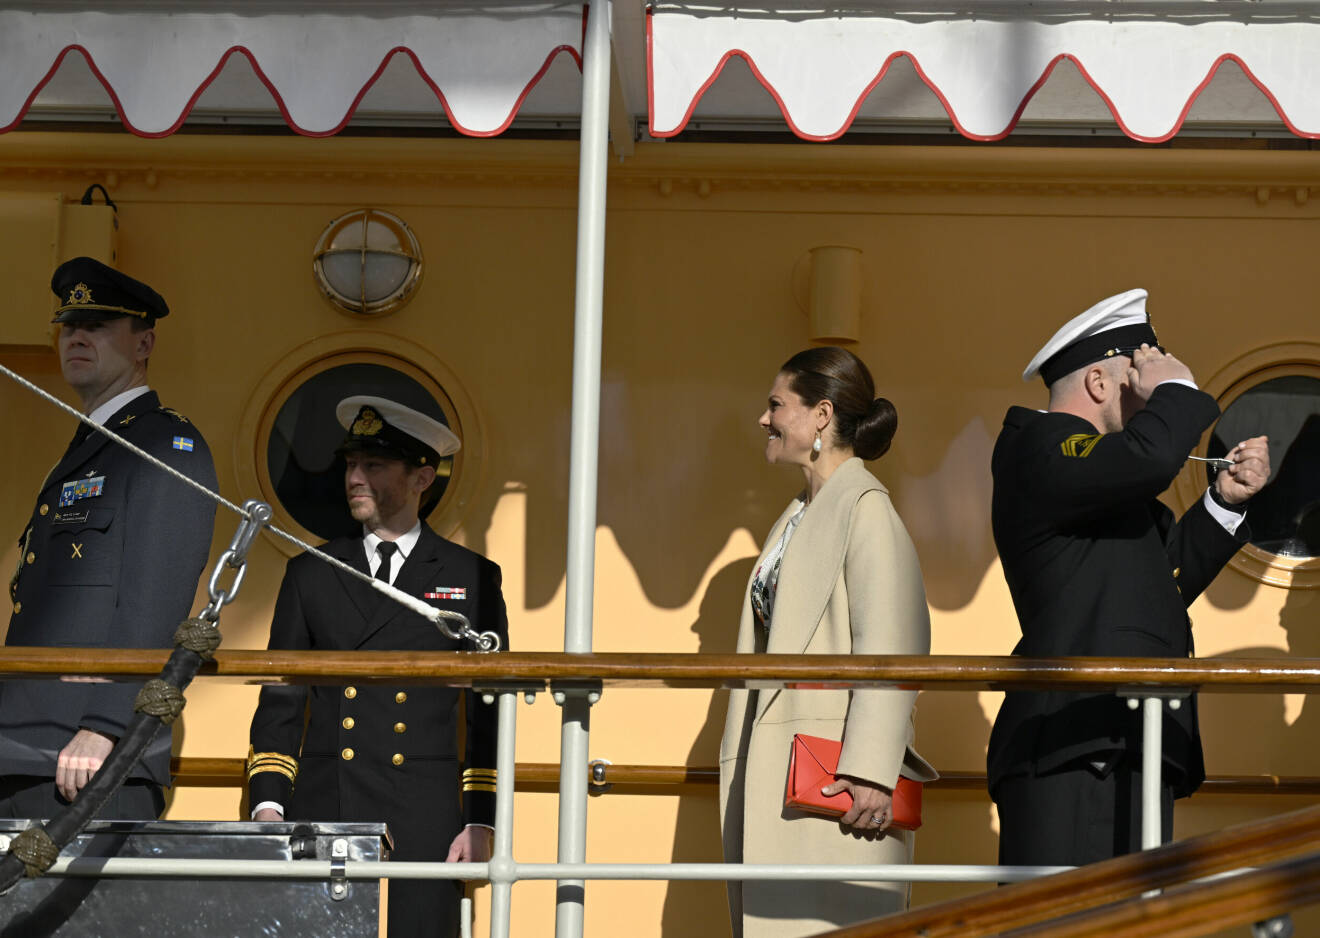 Statsbesök från Danmark – Kronprinsessan Victoria ombord på Kungaskeppet Dannebrog